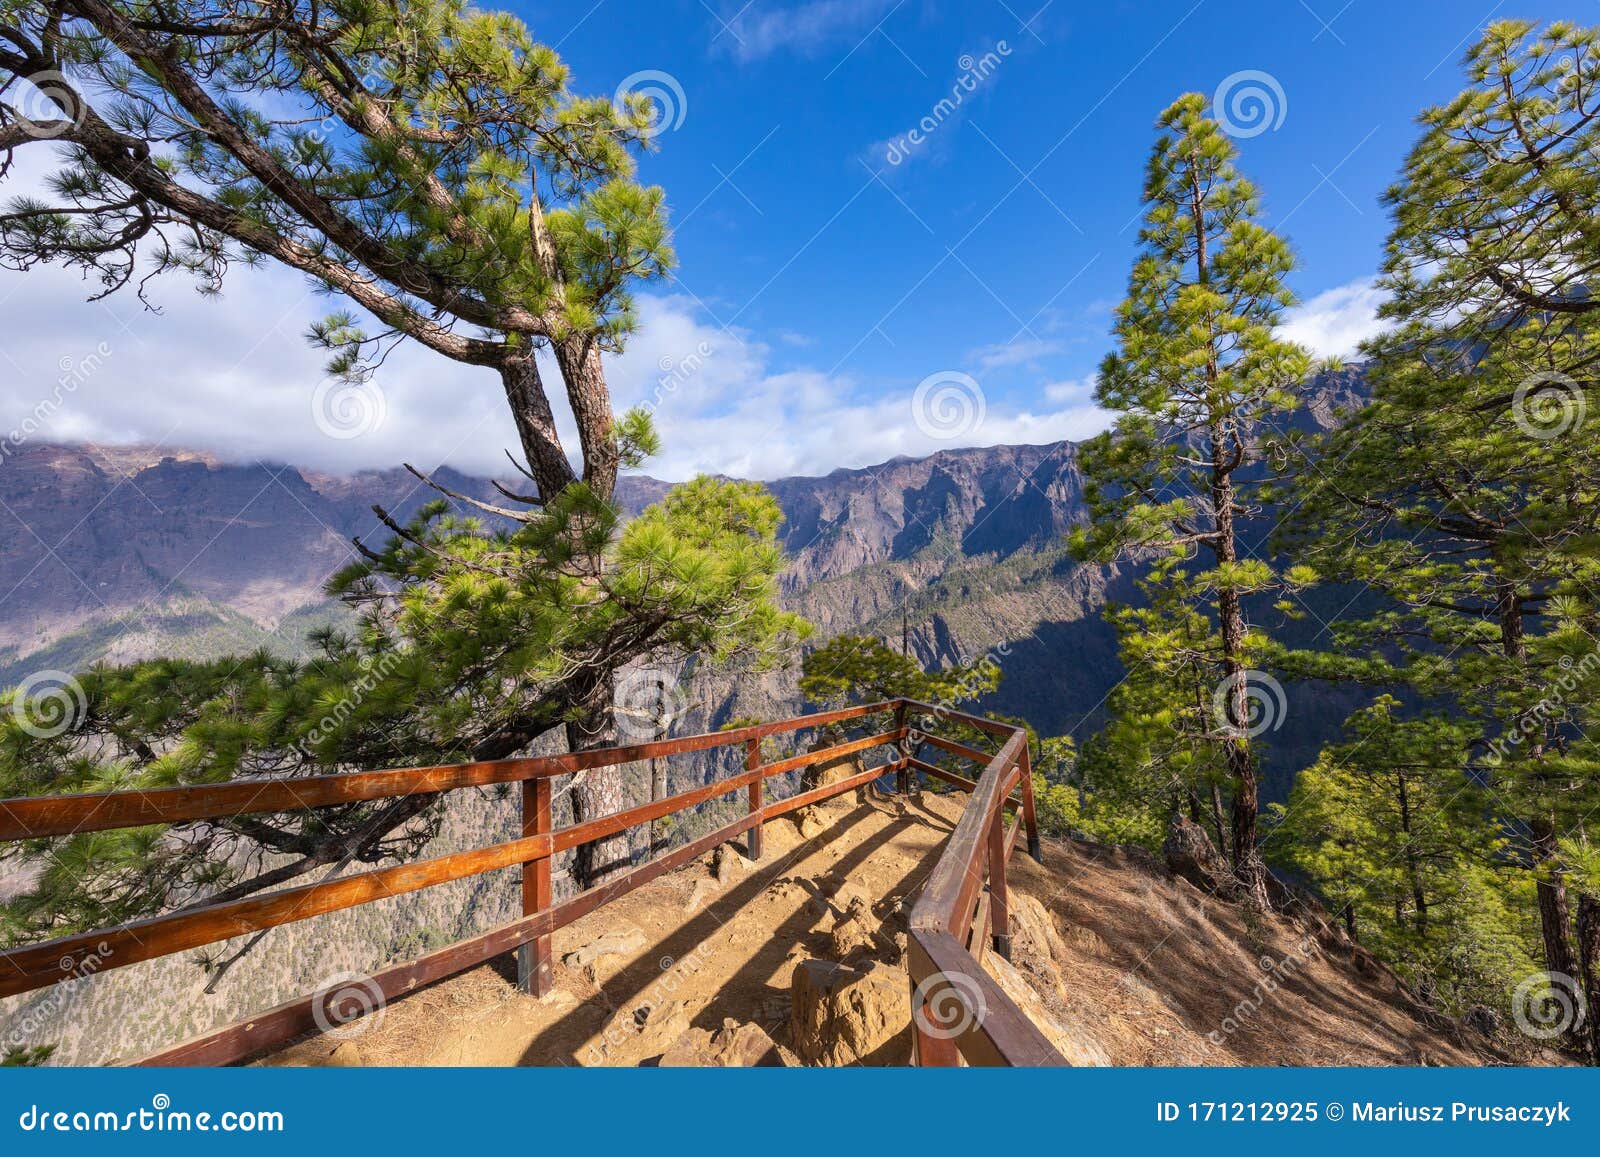 pine forest at caldera de taburiente national park. viewpoint la cumbrecita, la palma, canary island, spain